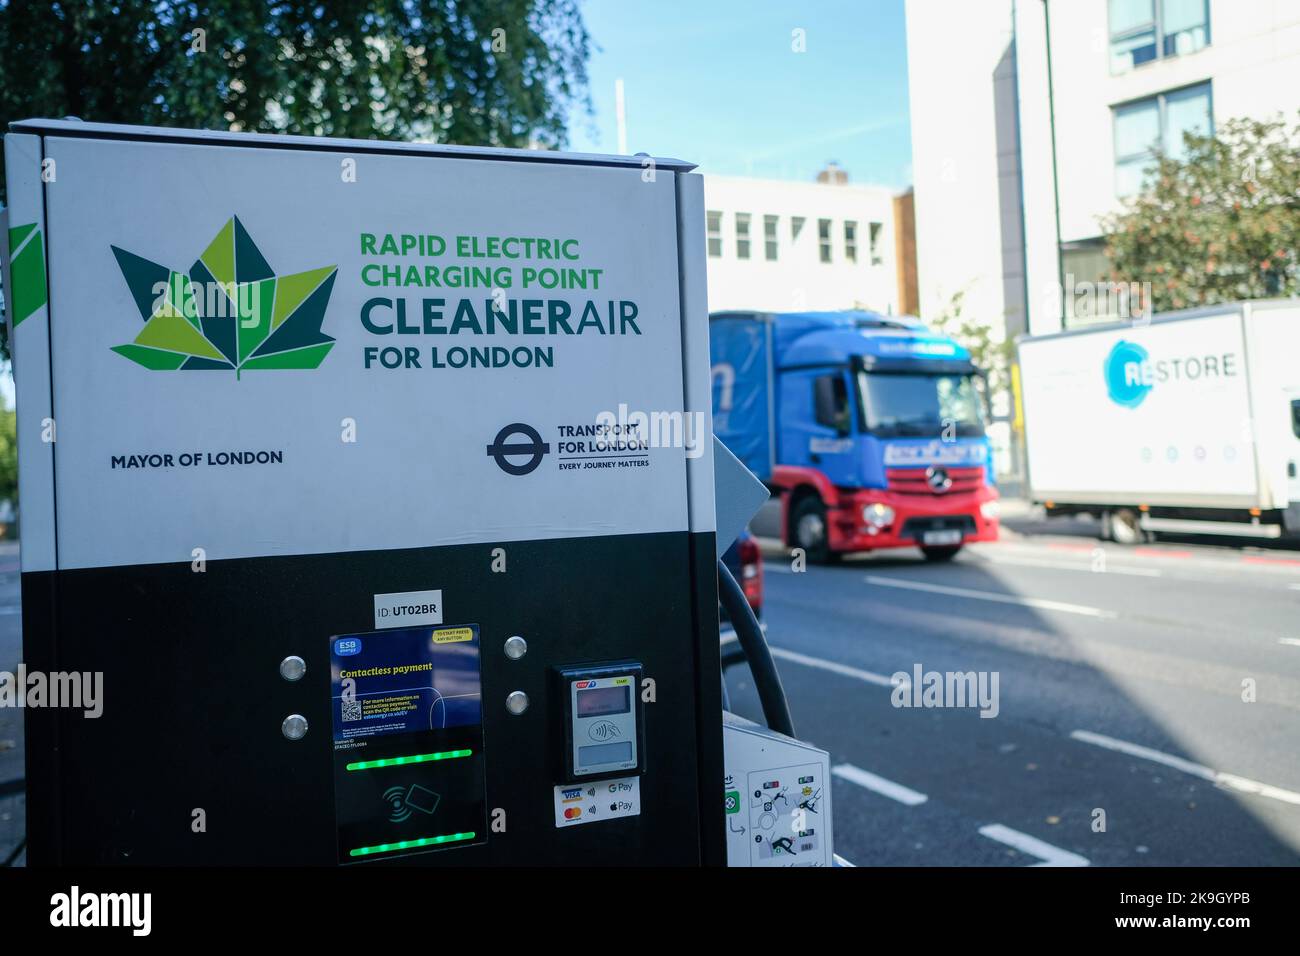 London - Oktober 2022: Eine Ladestation für Elektrofahrzeuge mit Transport for London-Logo in Putney, Südwesten Londons Stockfoto